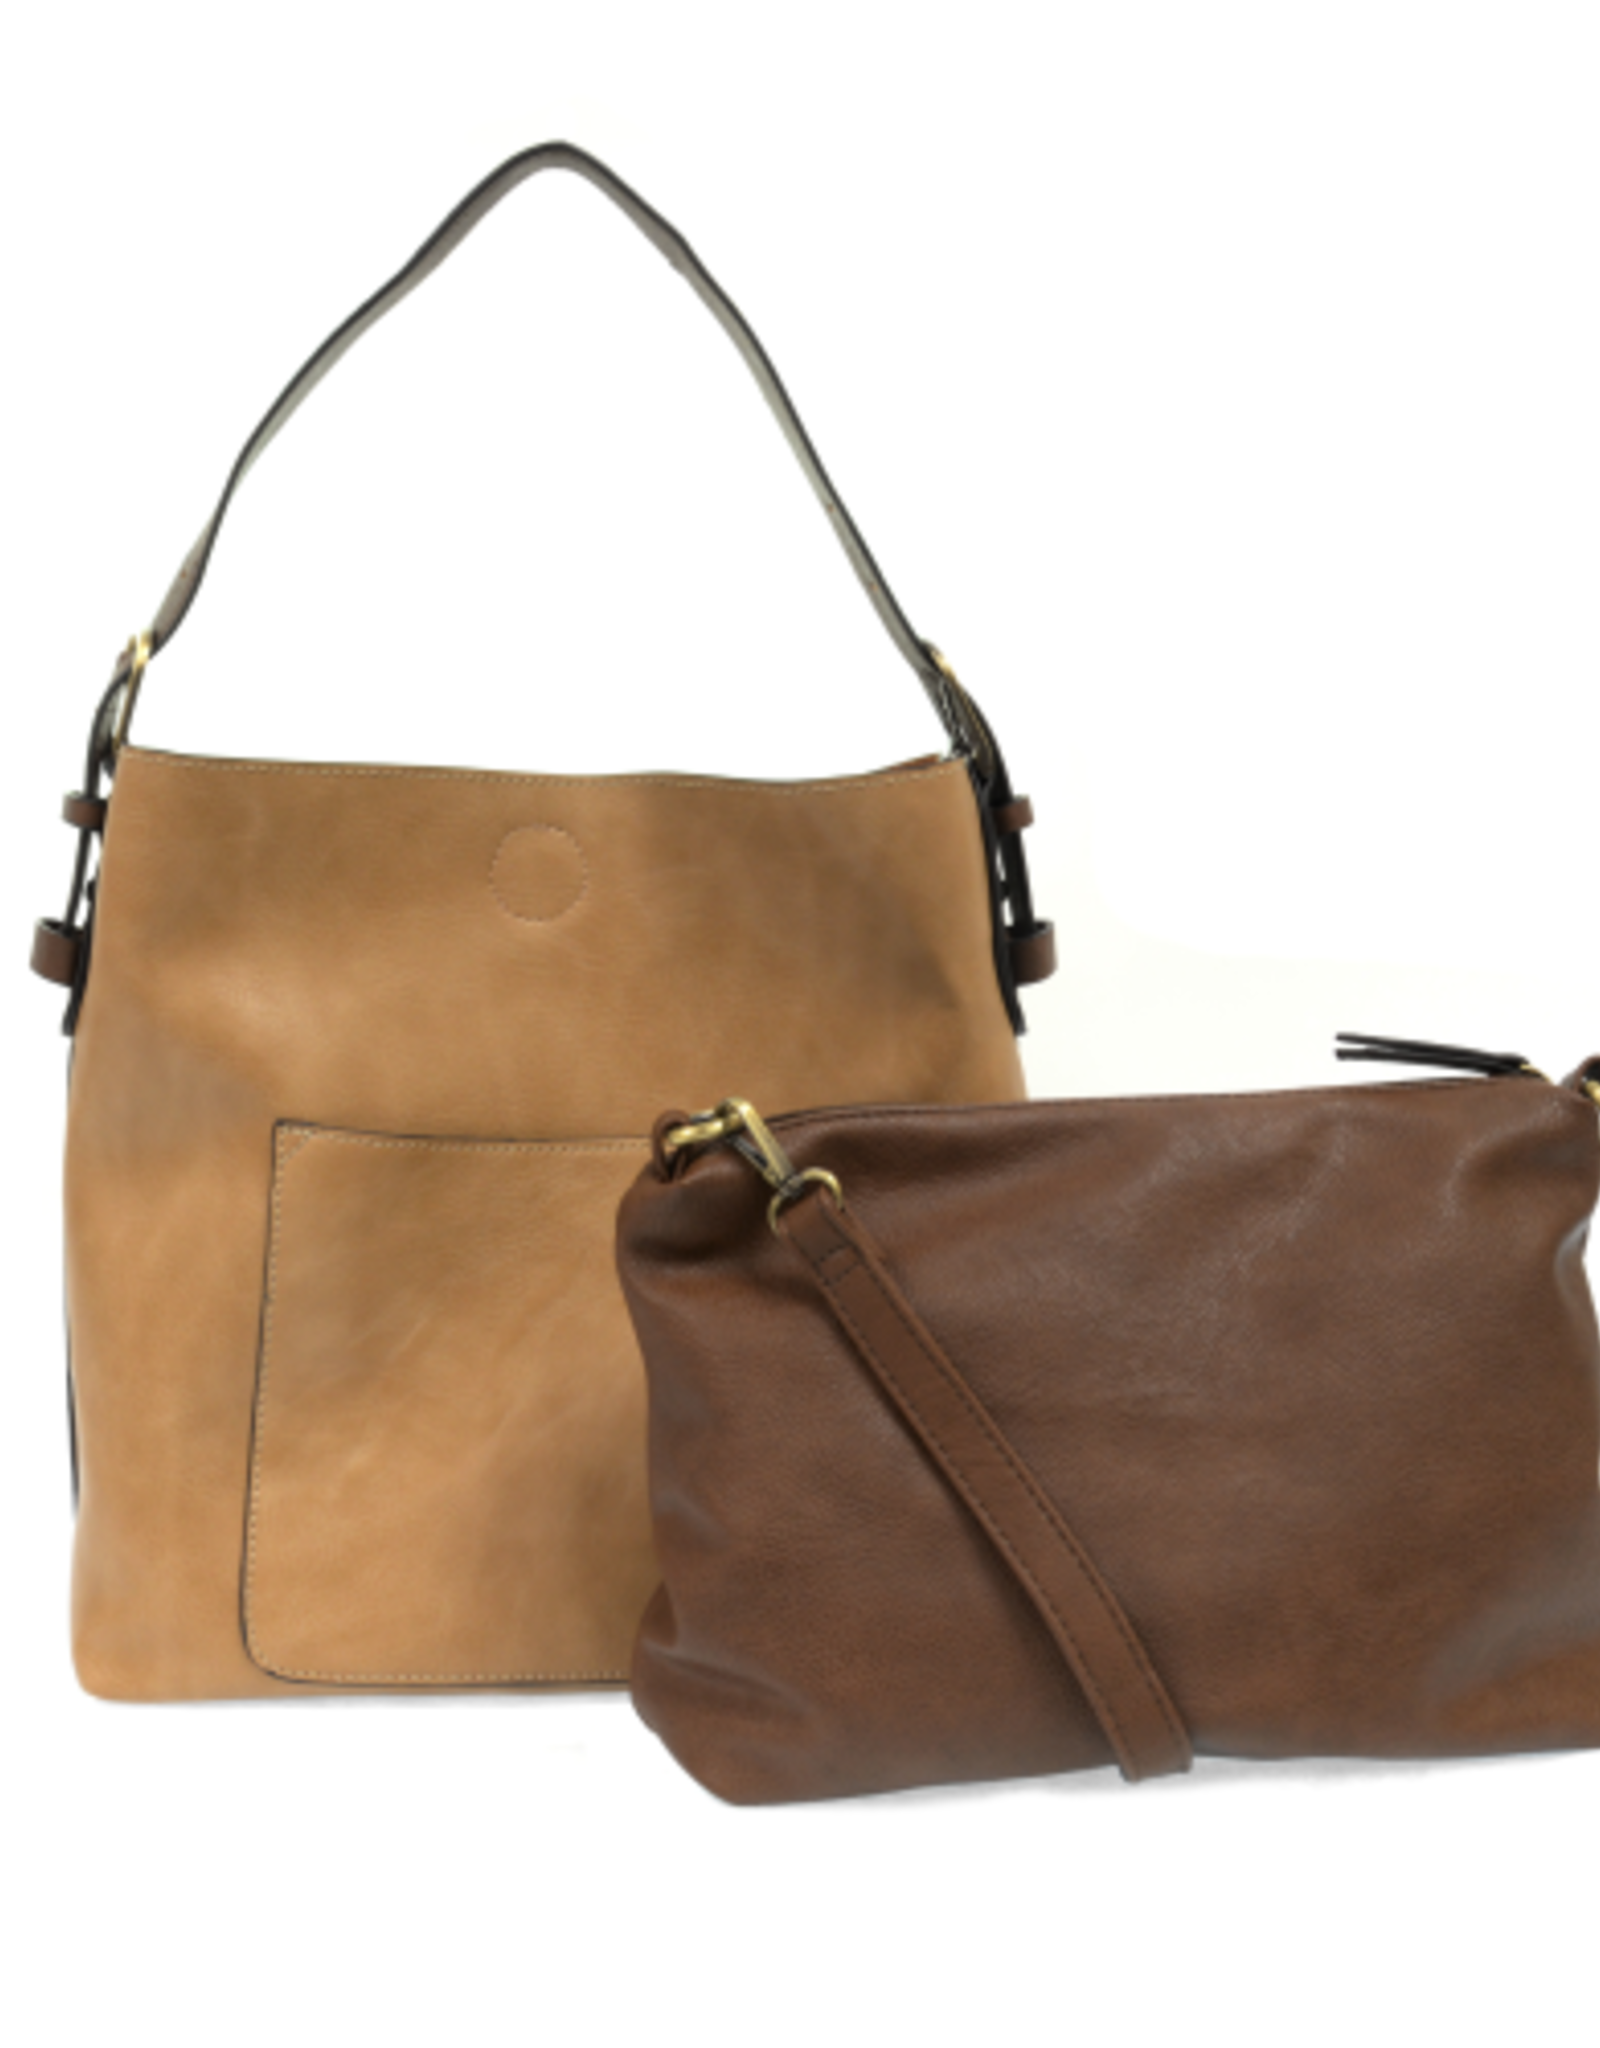 Joy Susan Accessories Classic Hobo Vegan Leather Handbag